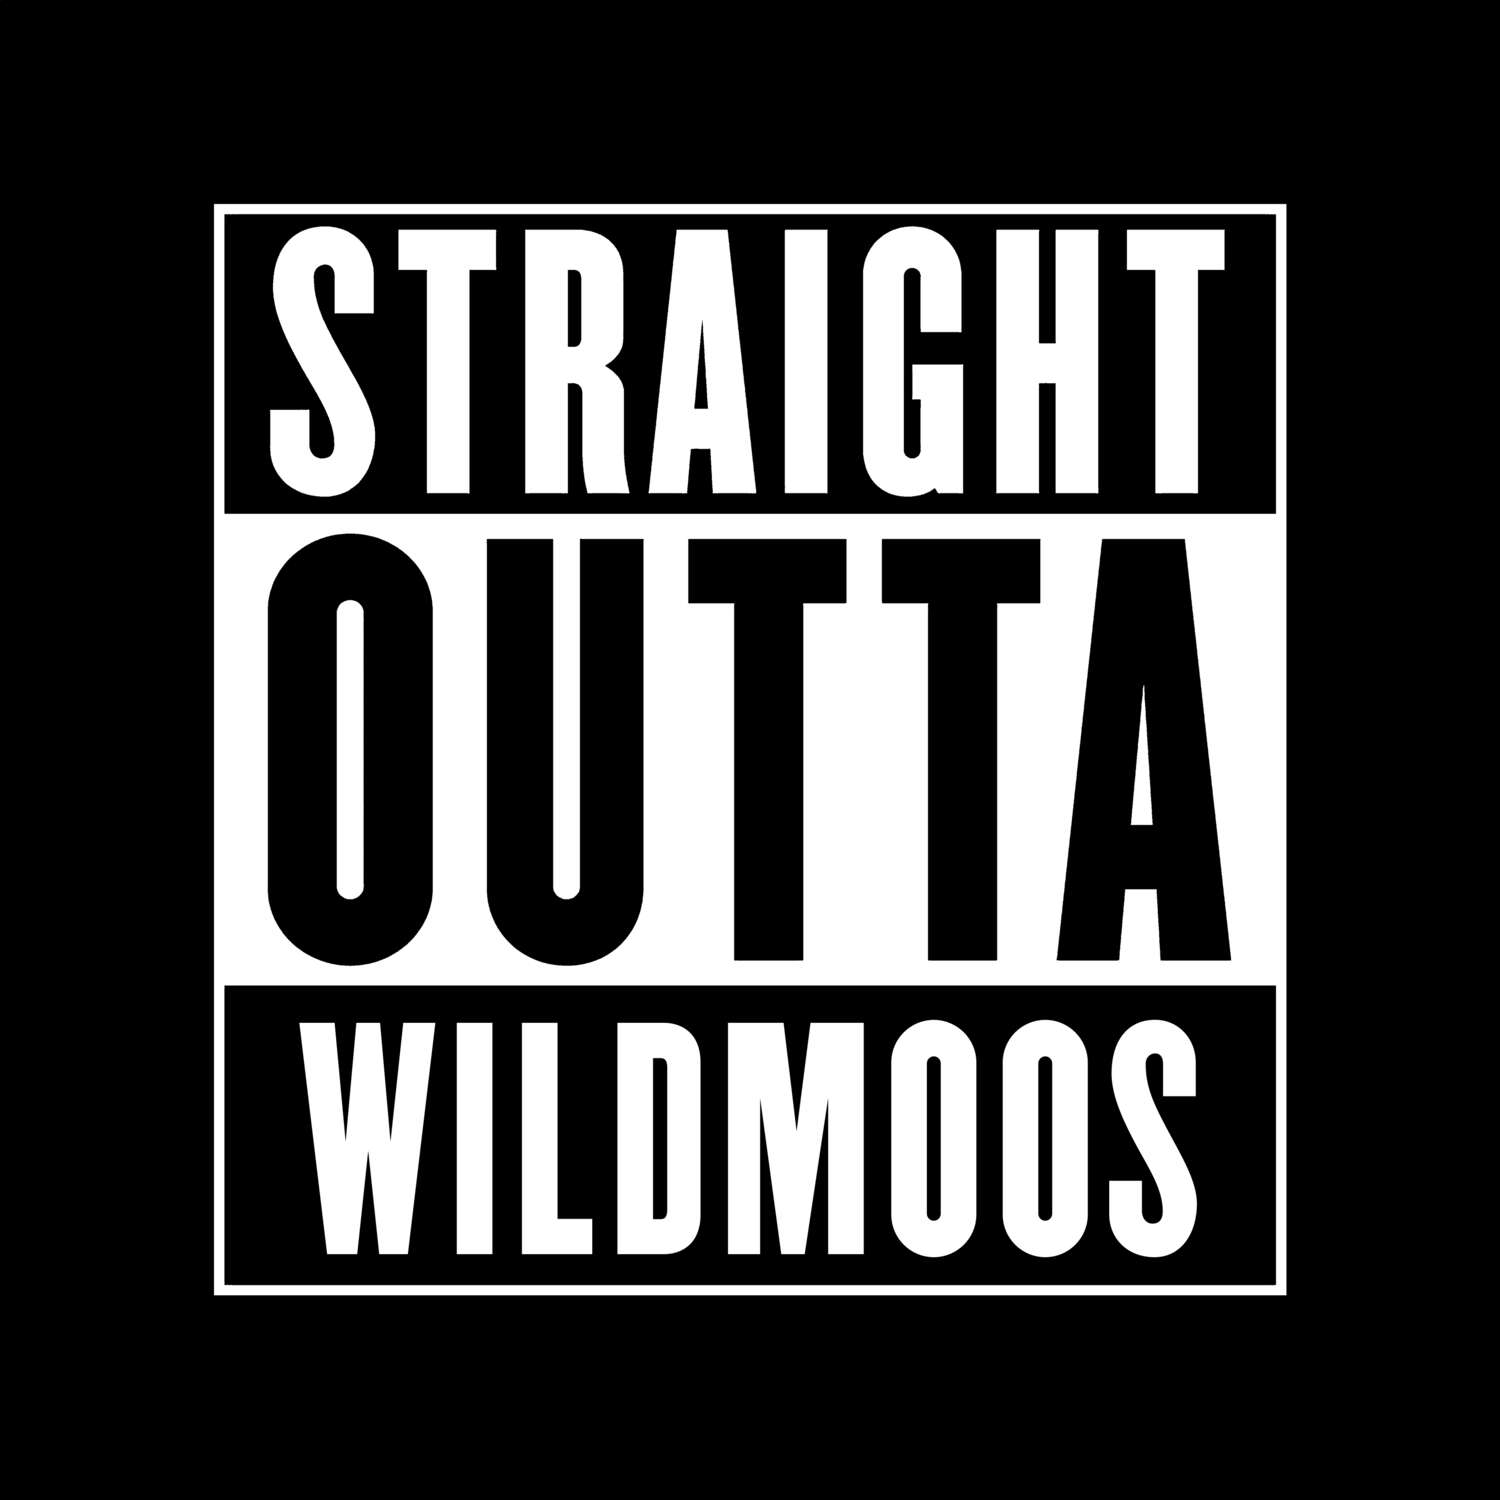 Wildmoos T-Shirt »Straight Outta«